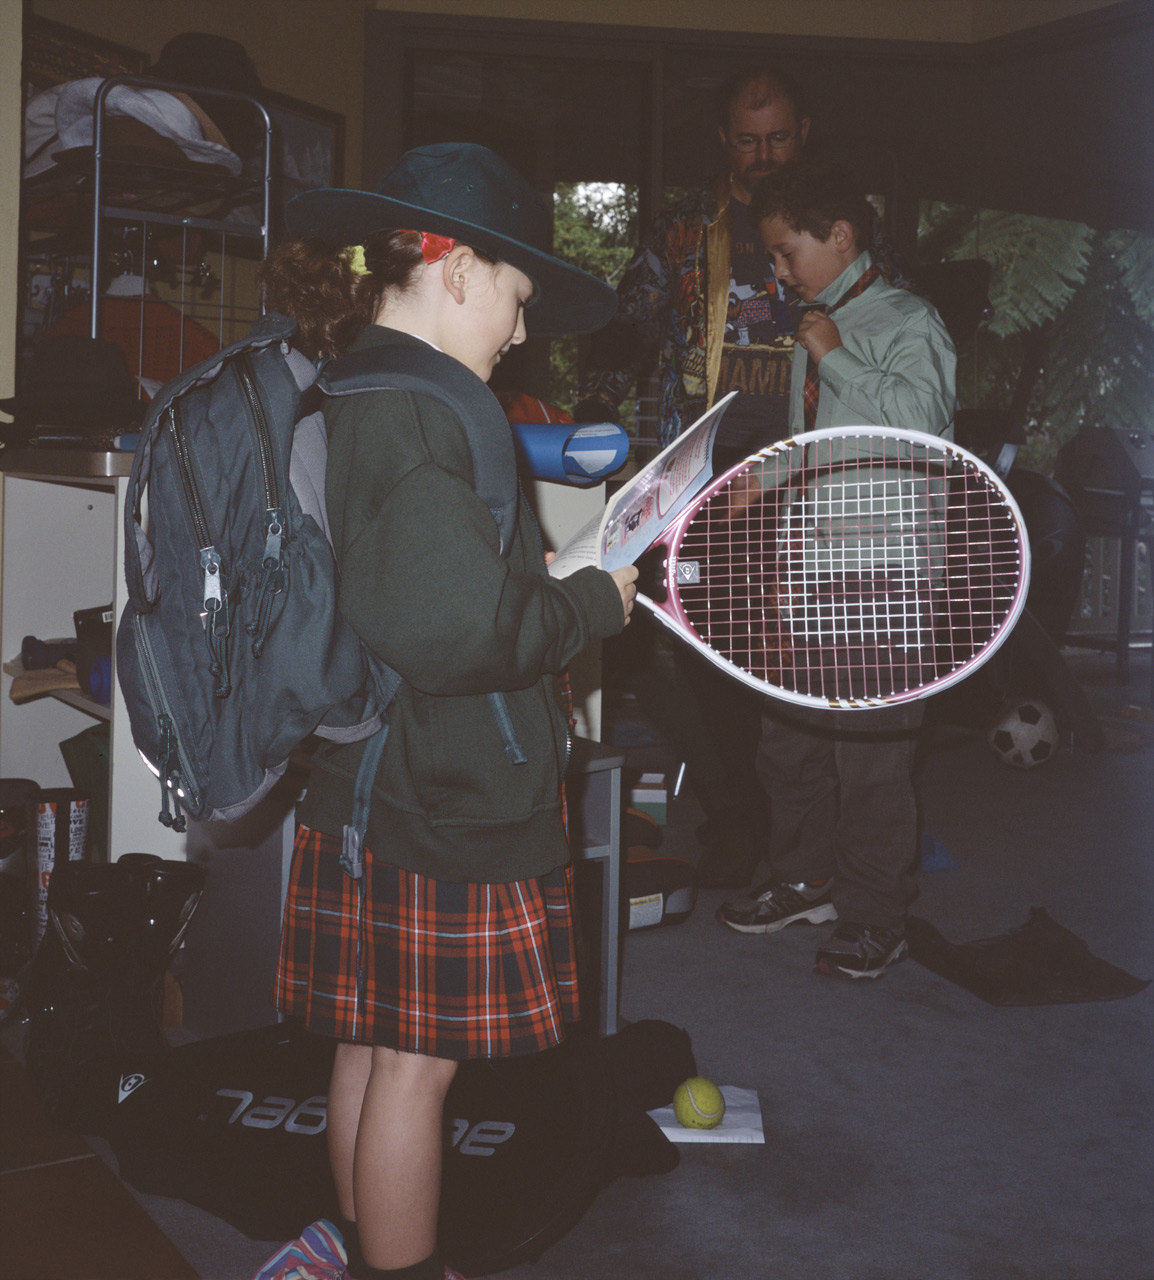 Sophia holding her tennis racket, John tying his tie, and Steve helping him in the play room before school